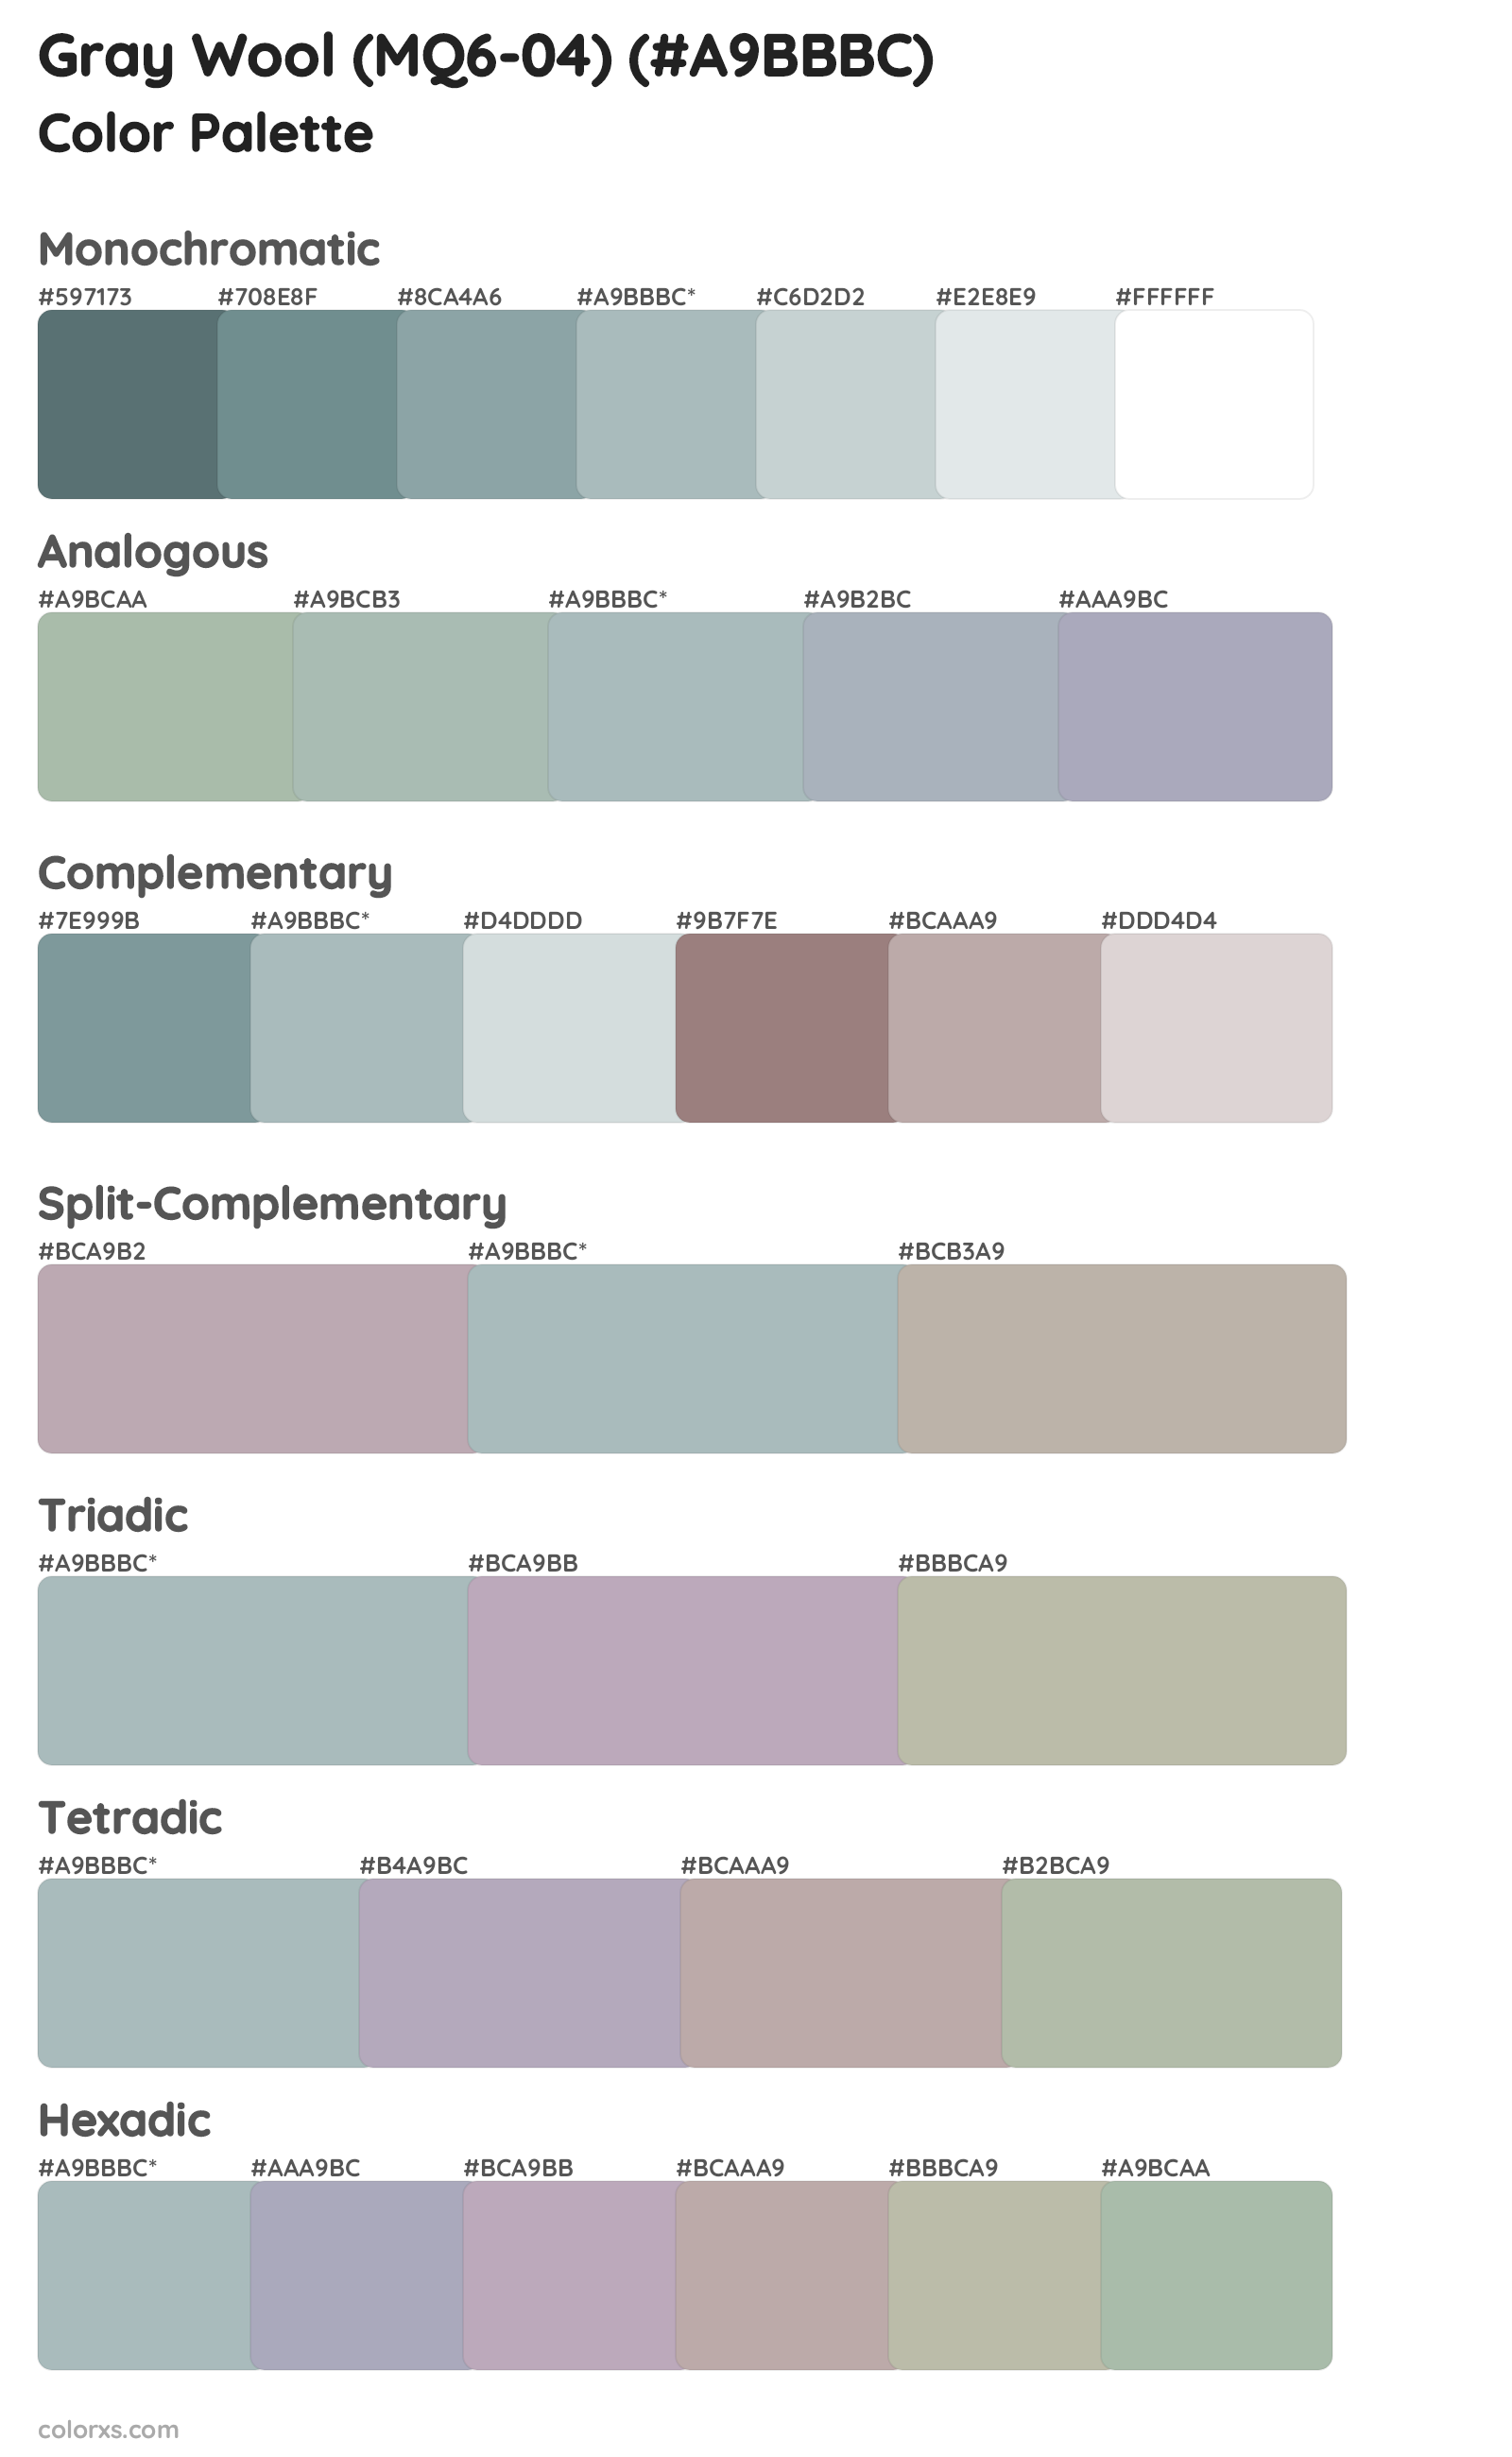 Gray Wool (MQ6-04) Color Scheme Palettes